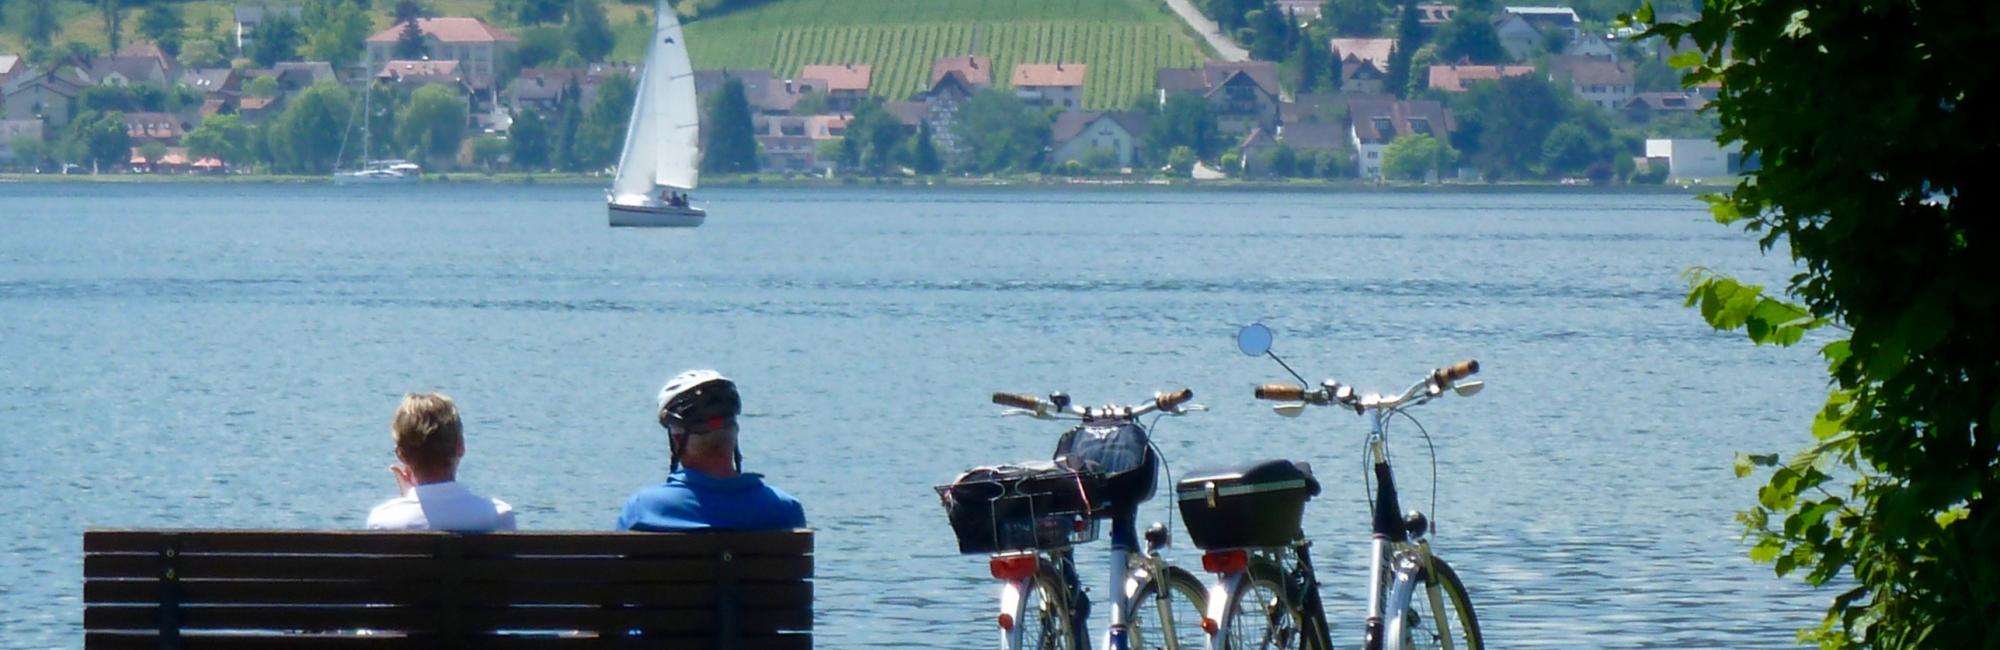 Bodensee Fietsvakantie - Bodensee Radweg fietsen